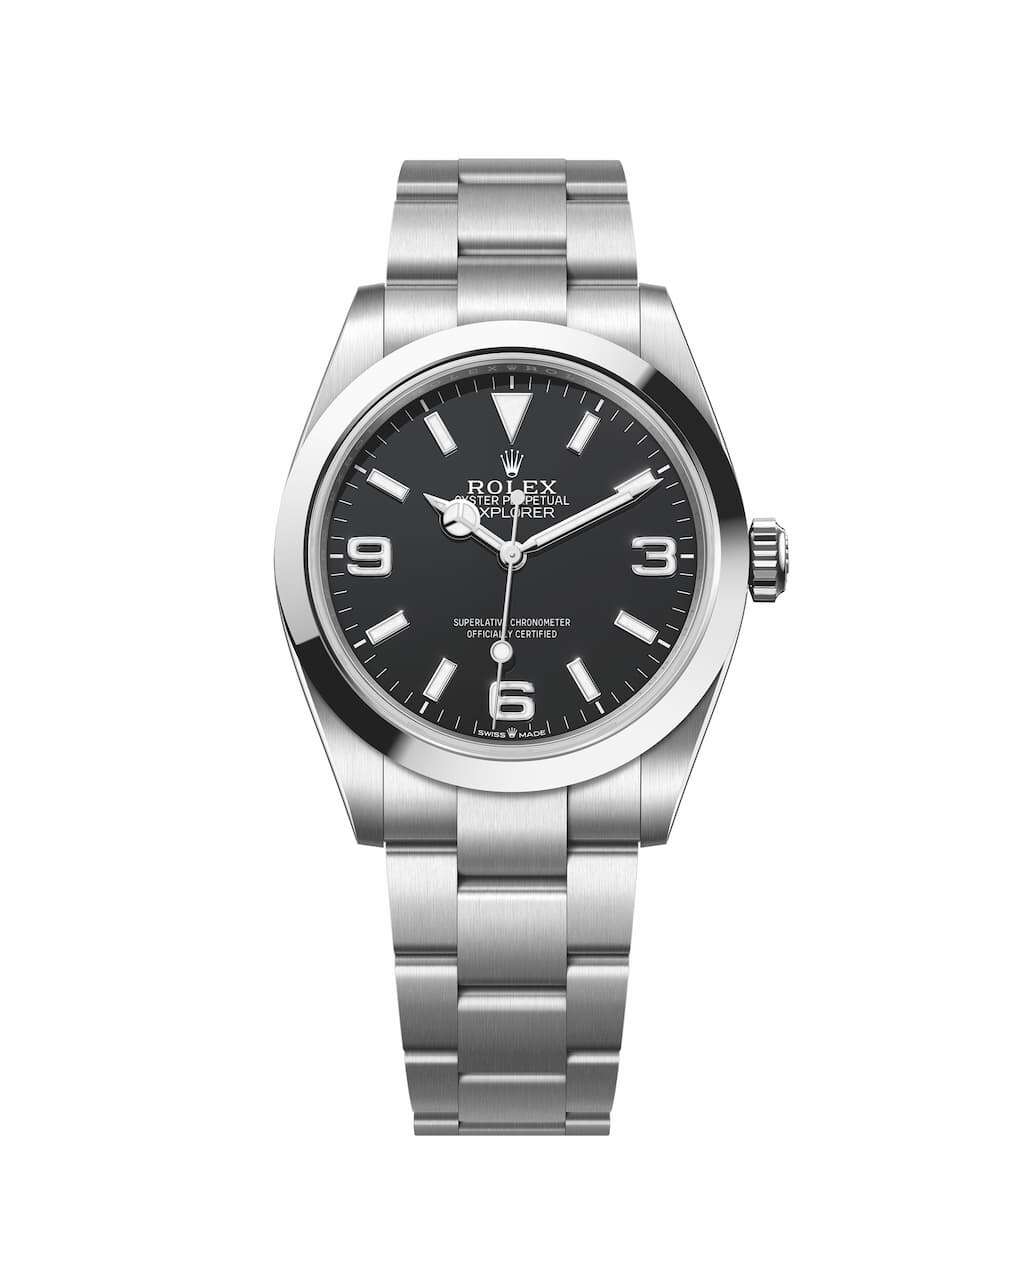 Rolex Explorer watch